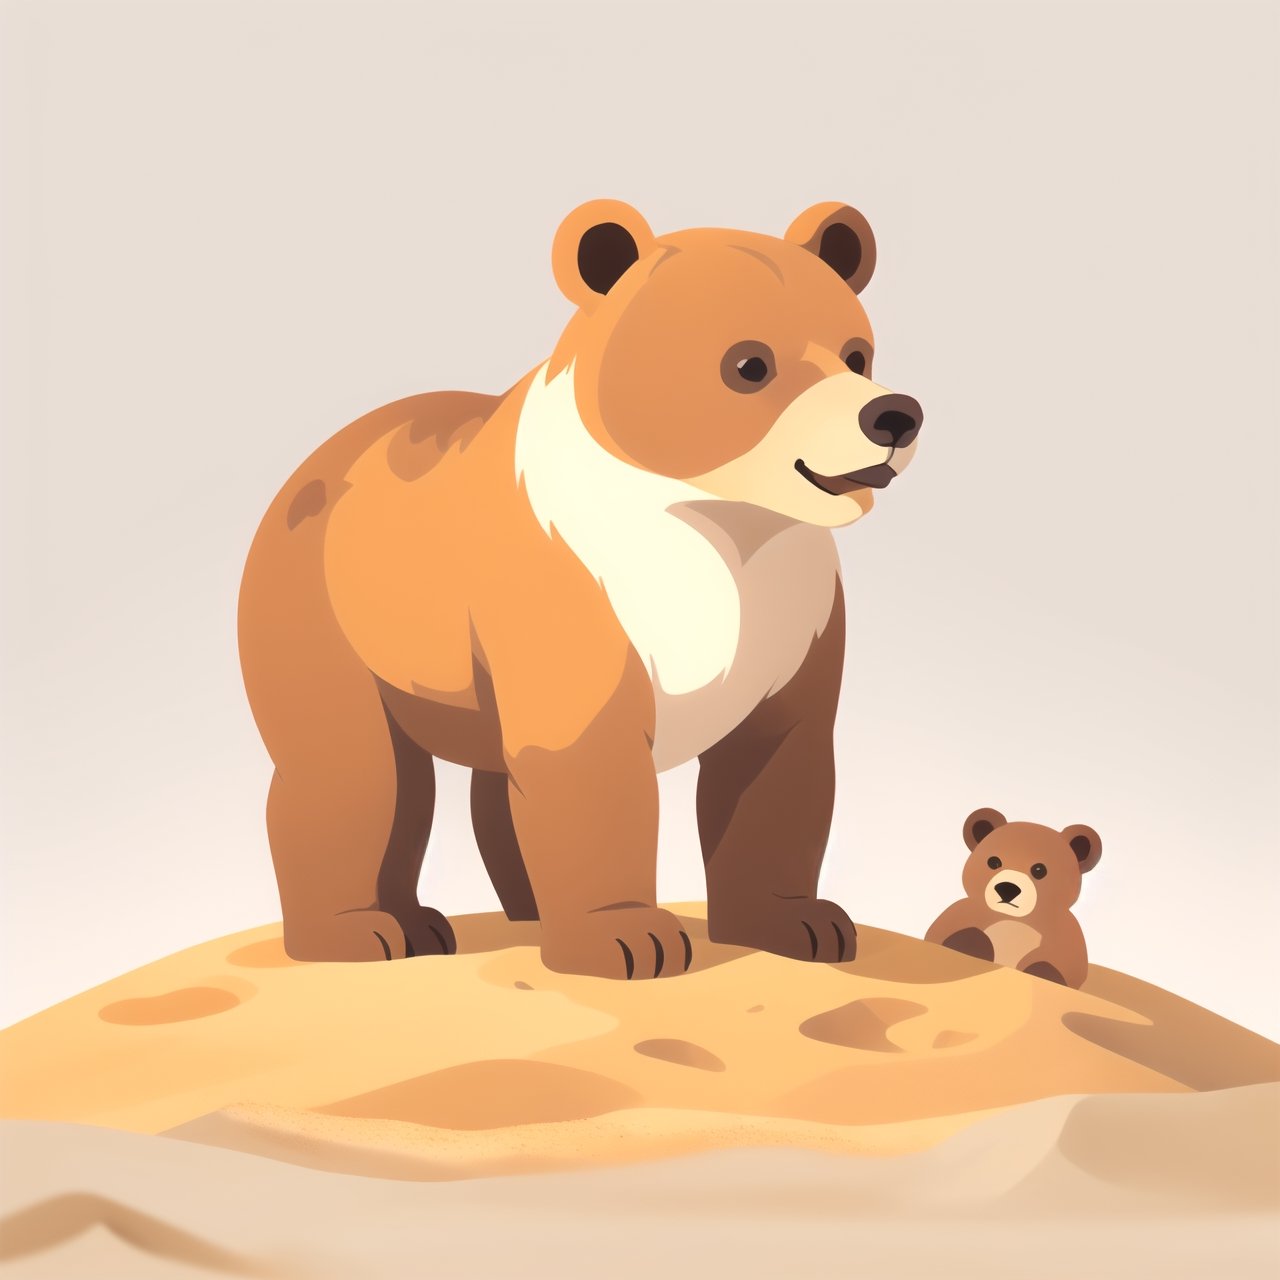 coloredic0n icon, a bear, light_orange_background, on sand